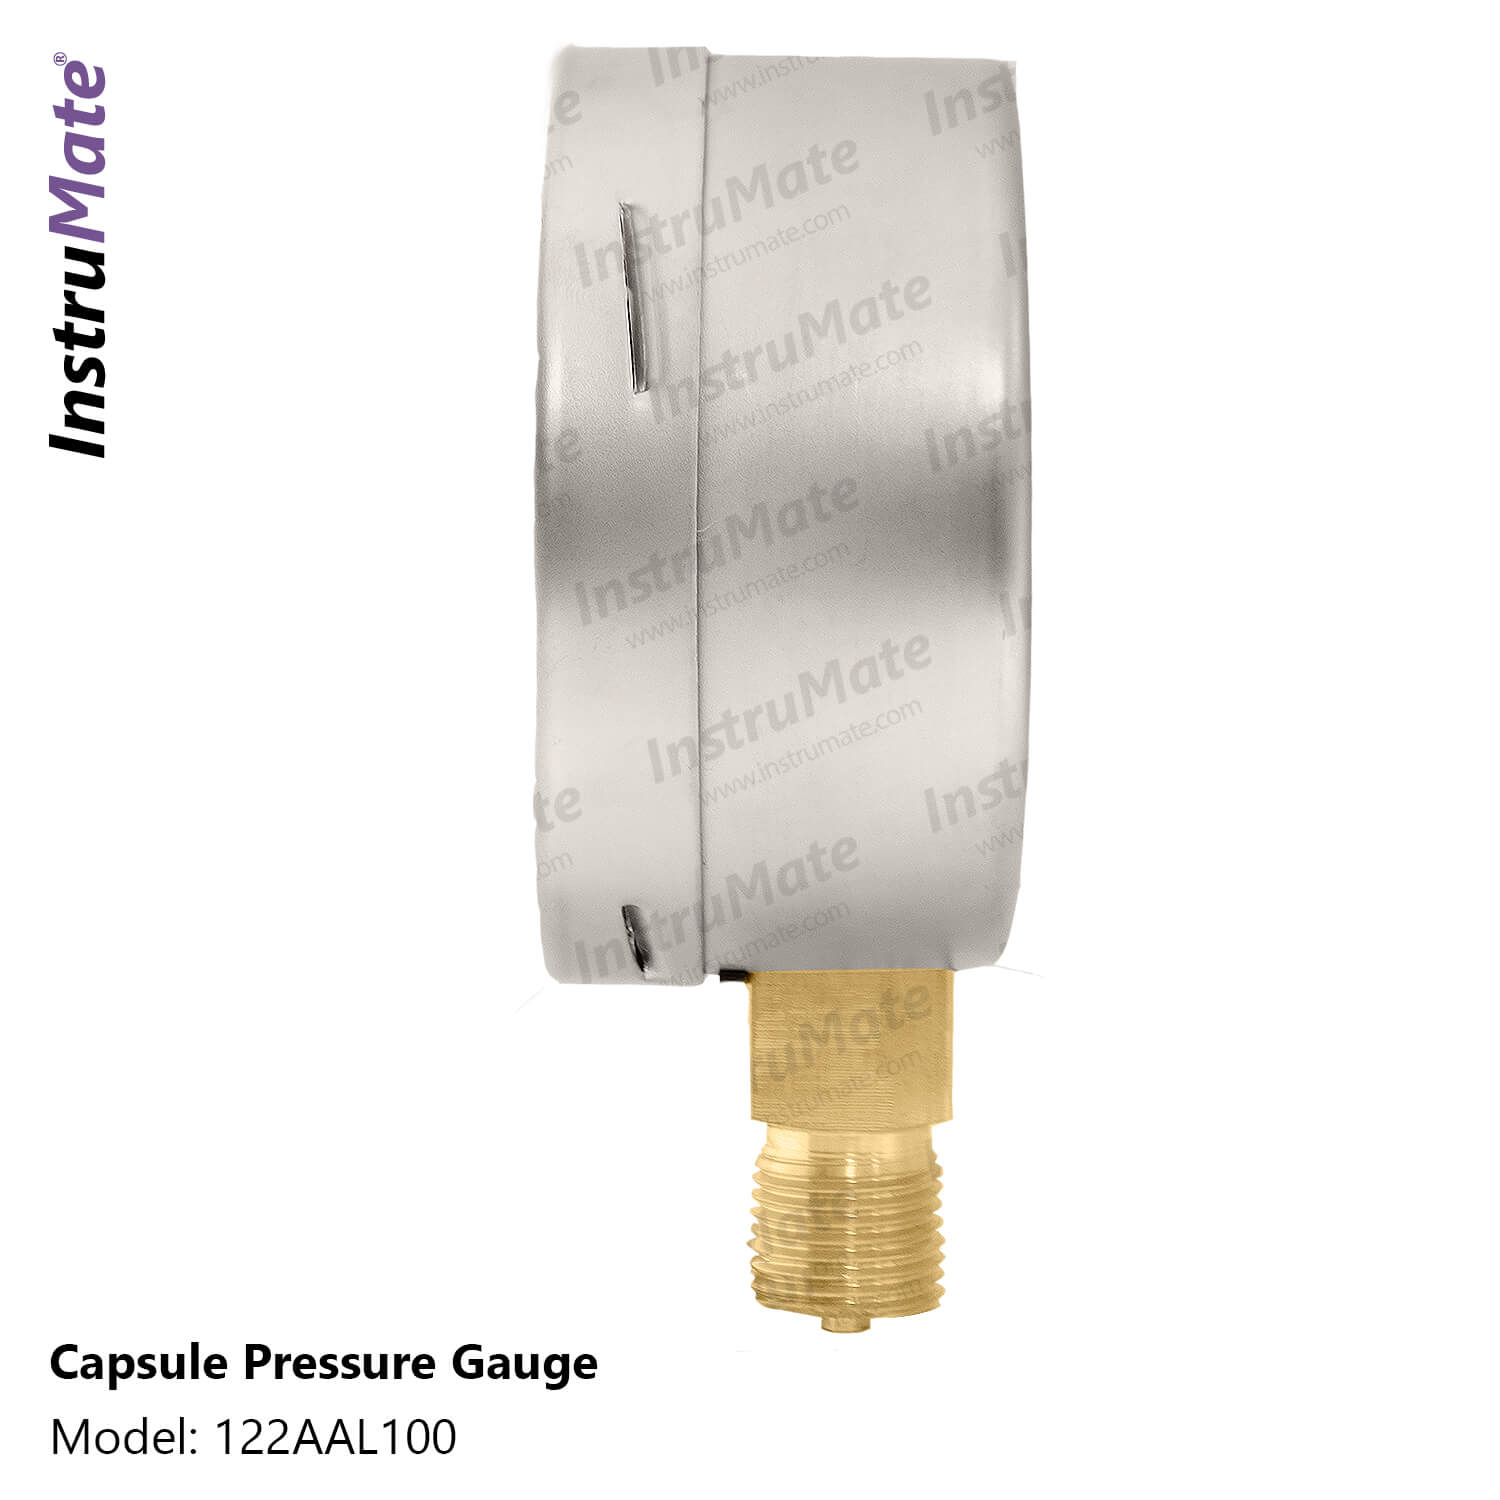 Capsule pressure gauge - 122AA - InstruMate